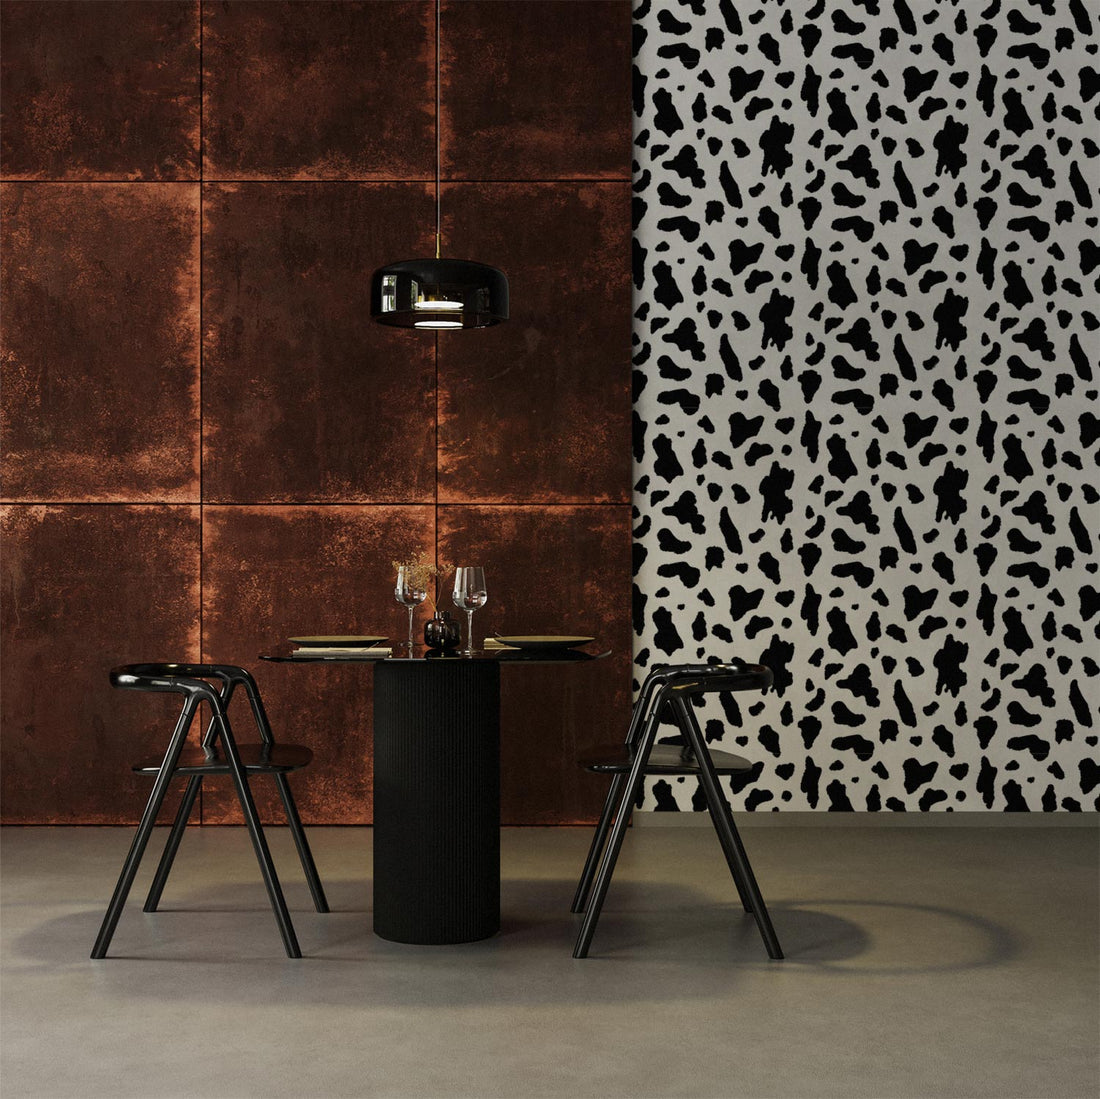 Modern cow print wallpaper peel and stick wallpaper with cow pattern or classic wallpaper for commercial interiors